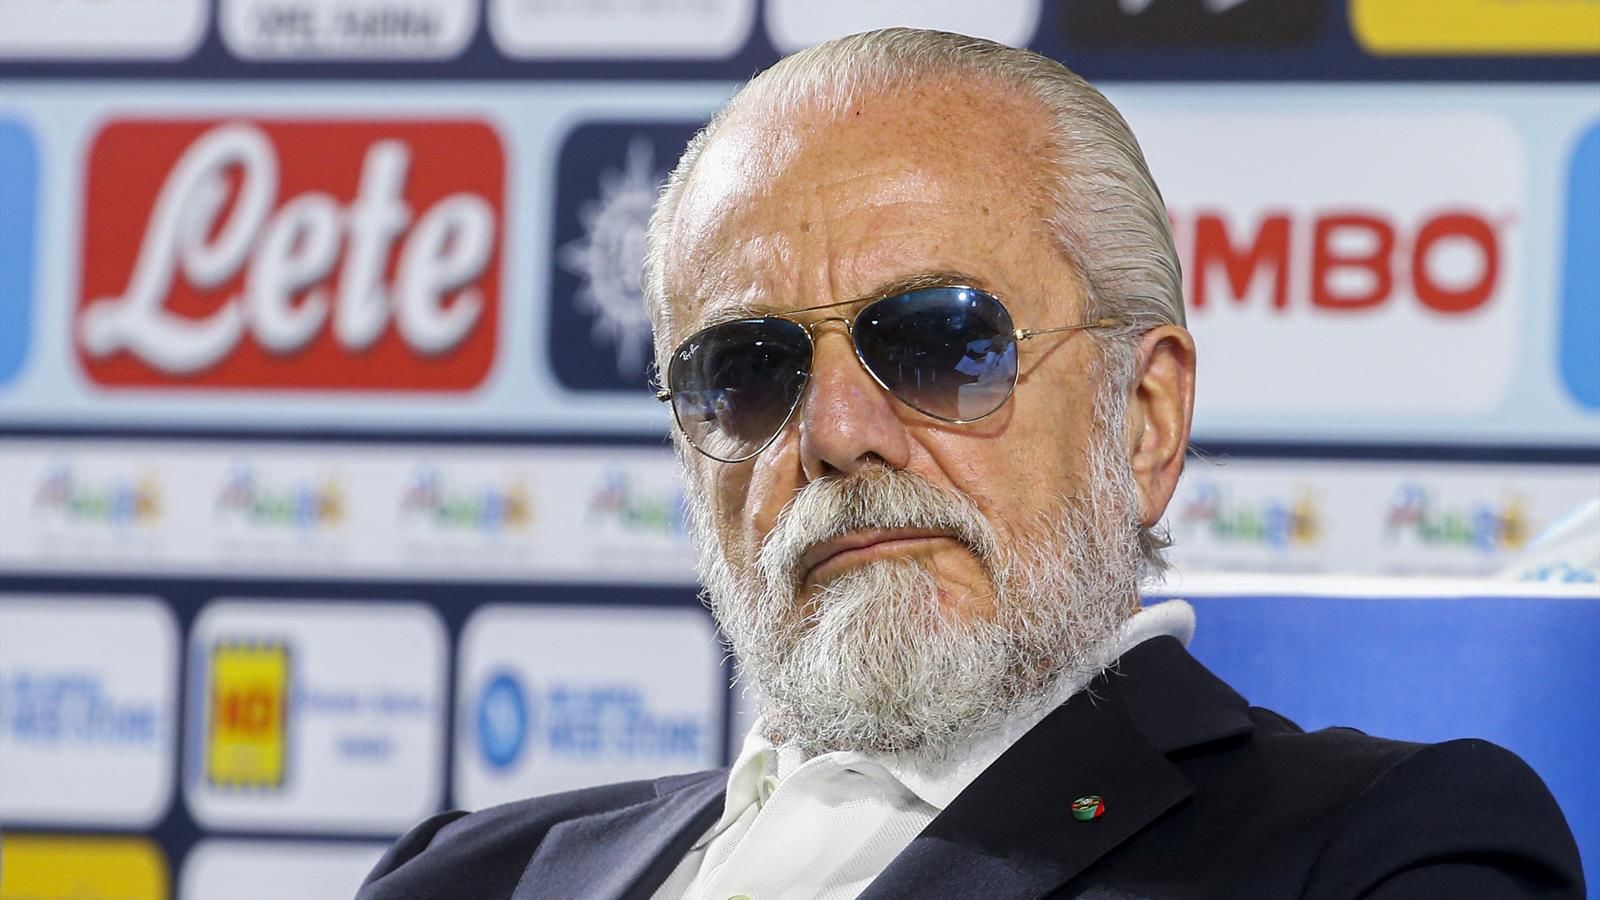  De Laurentiis, presidente del Napoli, acusó a la FIFA de robar miles de millones